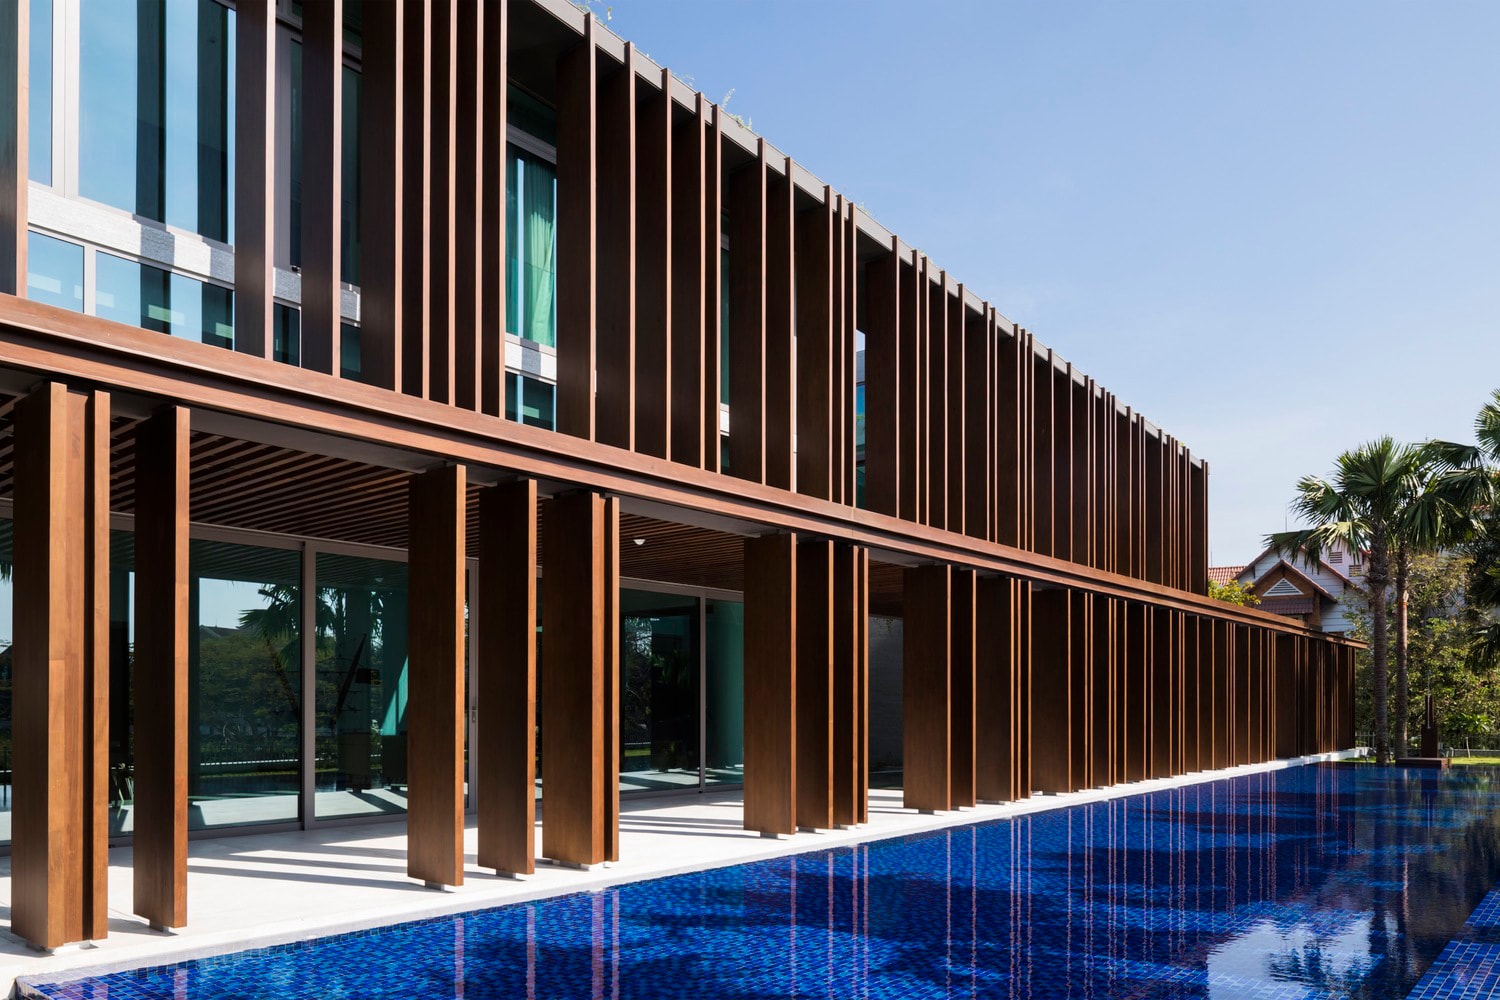 Louvers House Mia Design Studio Thảo Điền Vietnam Modern Wooden Exterior House courtyard design inspiration interior